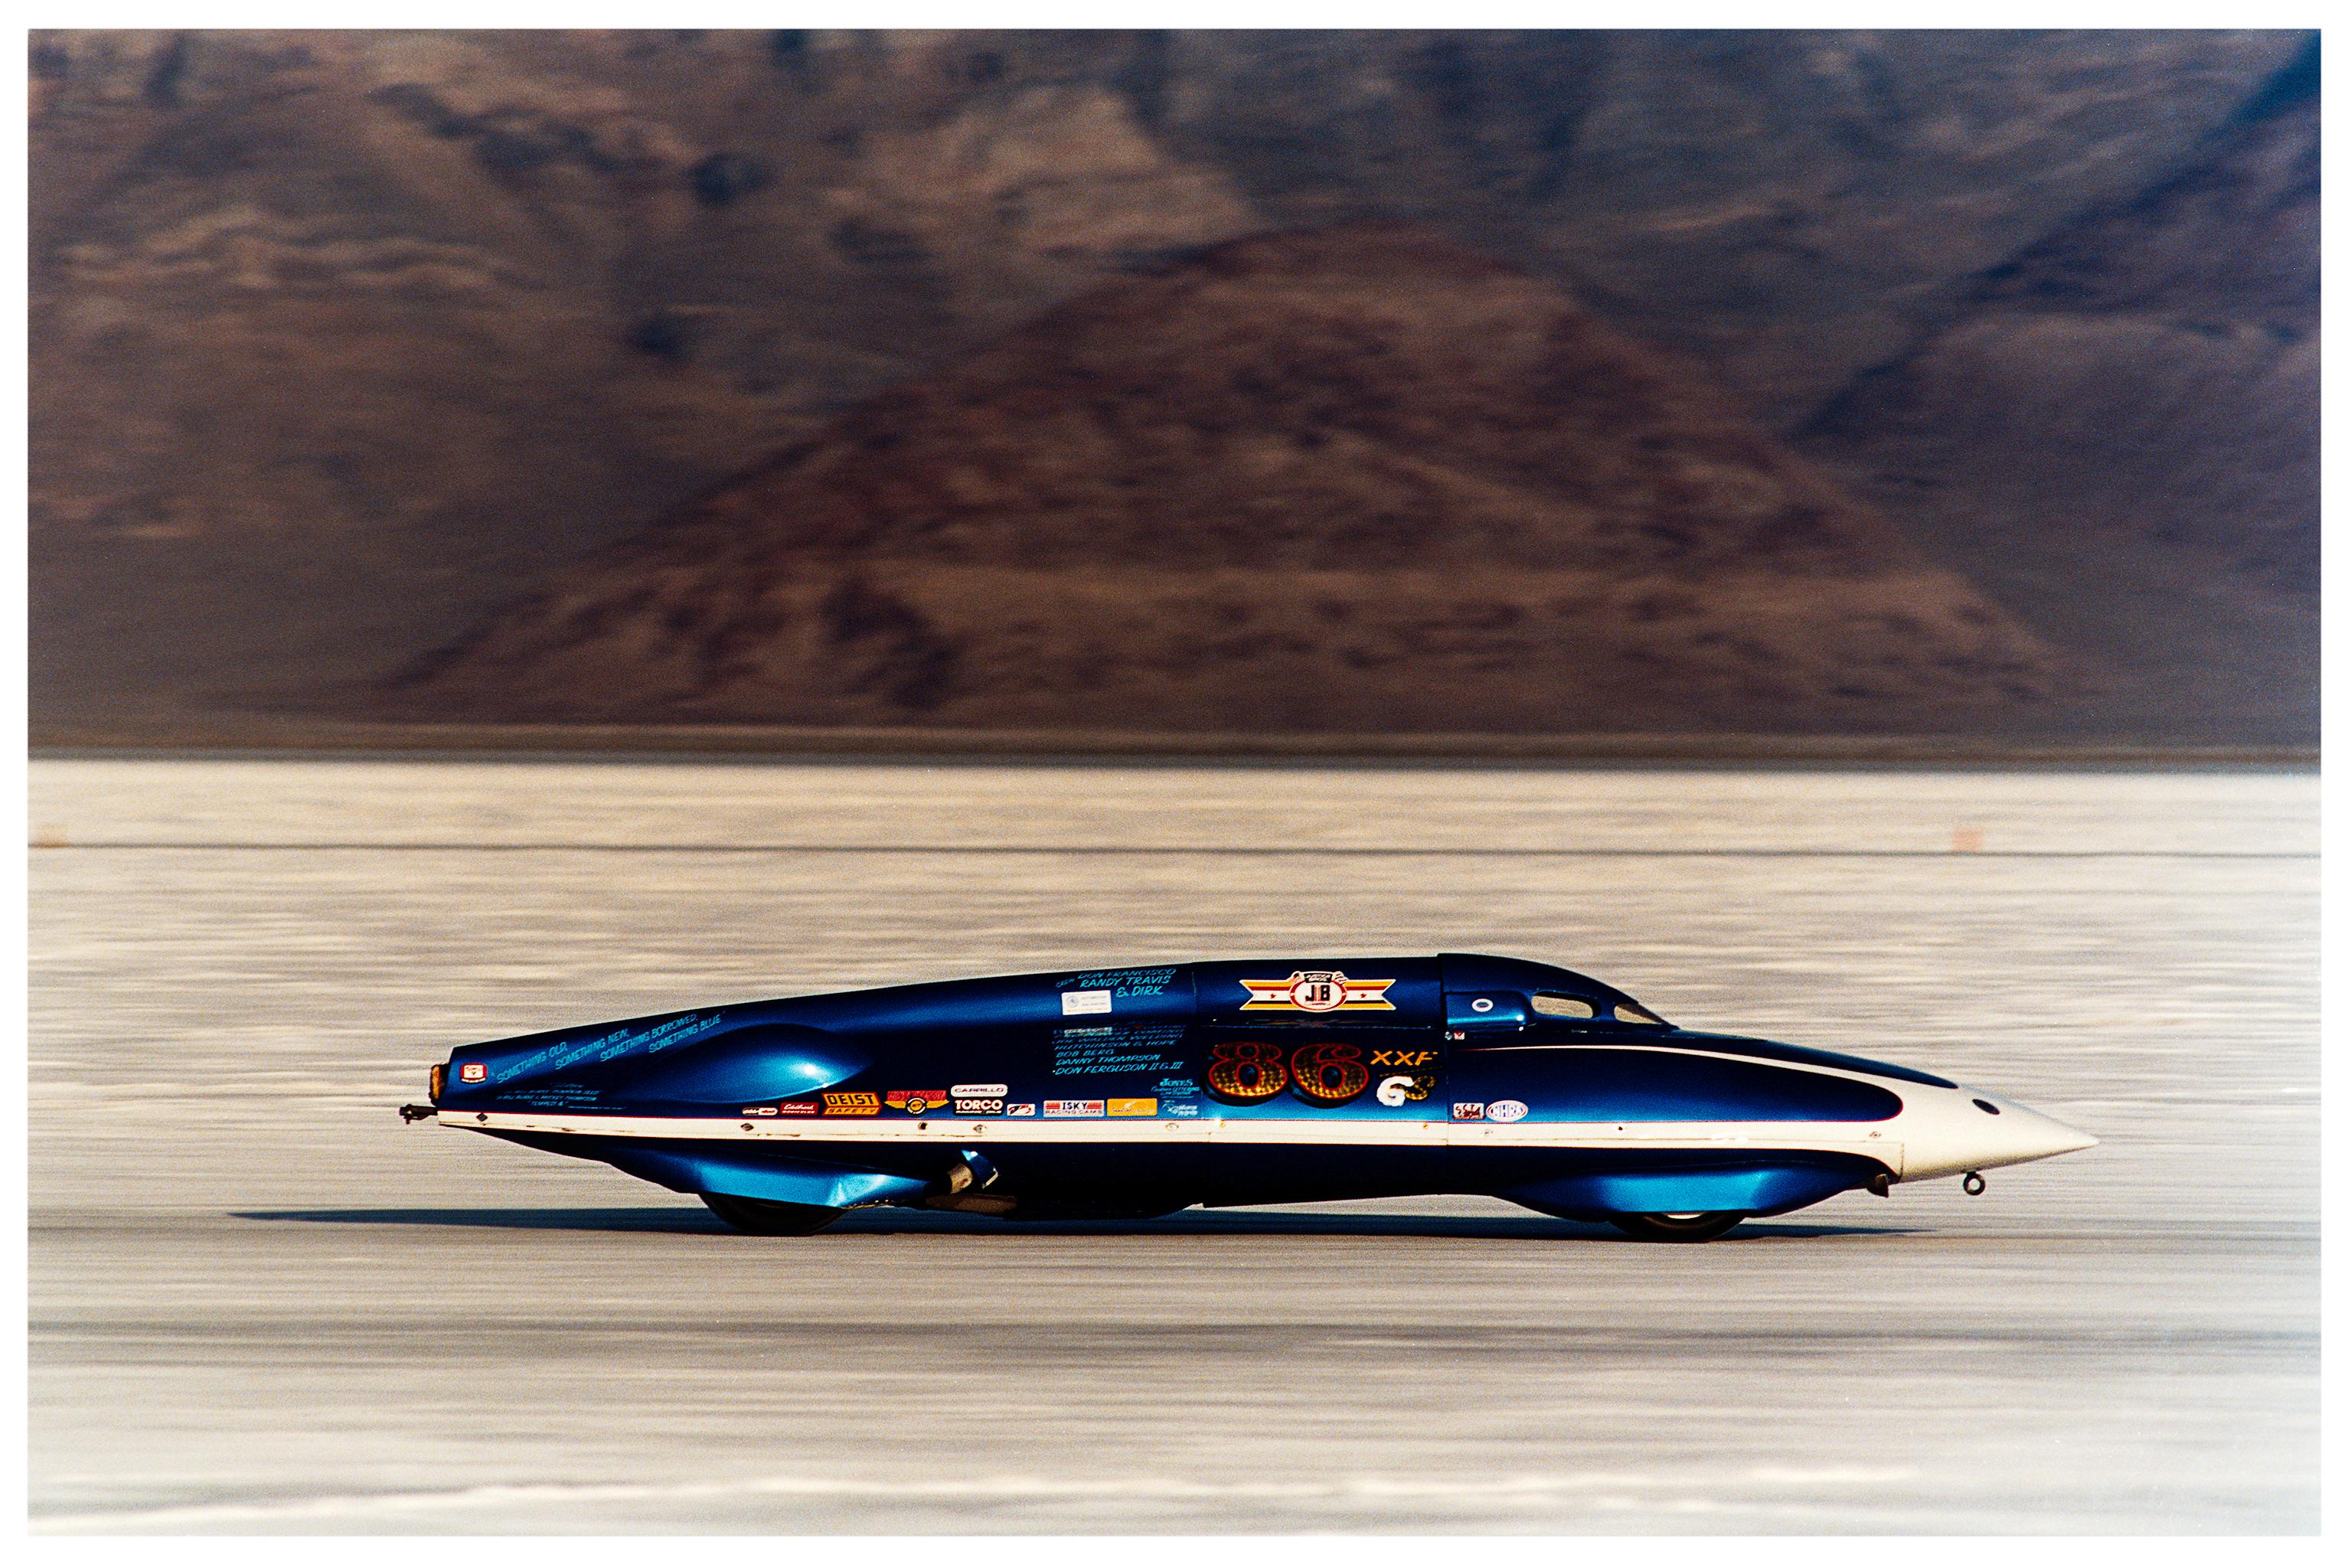 Richard Heeps Color Photograph - LSR Racing Streamliner, Bonneville, Utah - American Landscape Car Photo